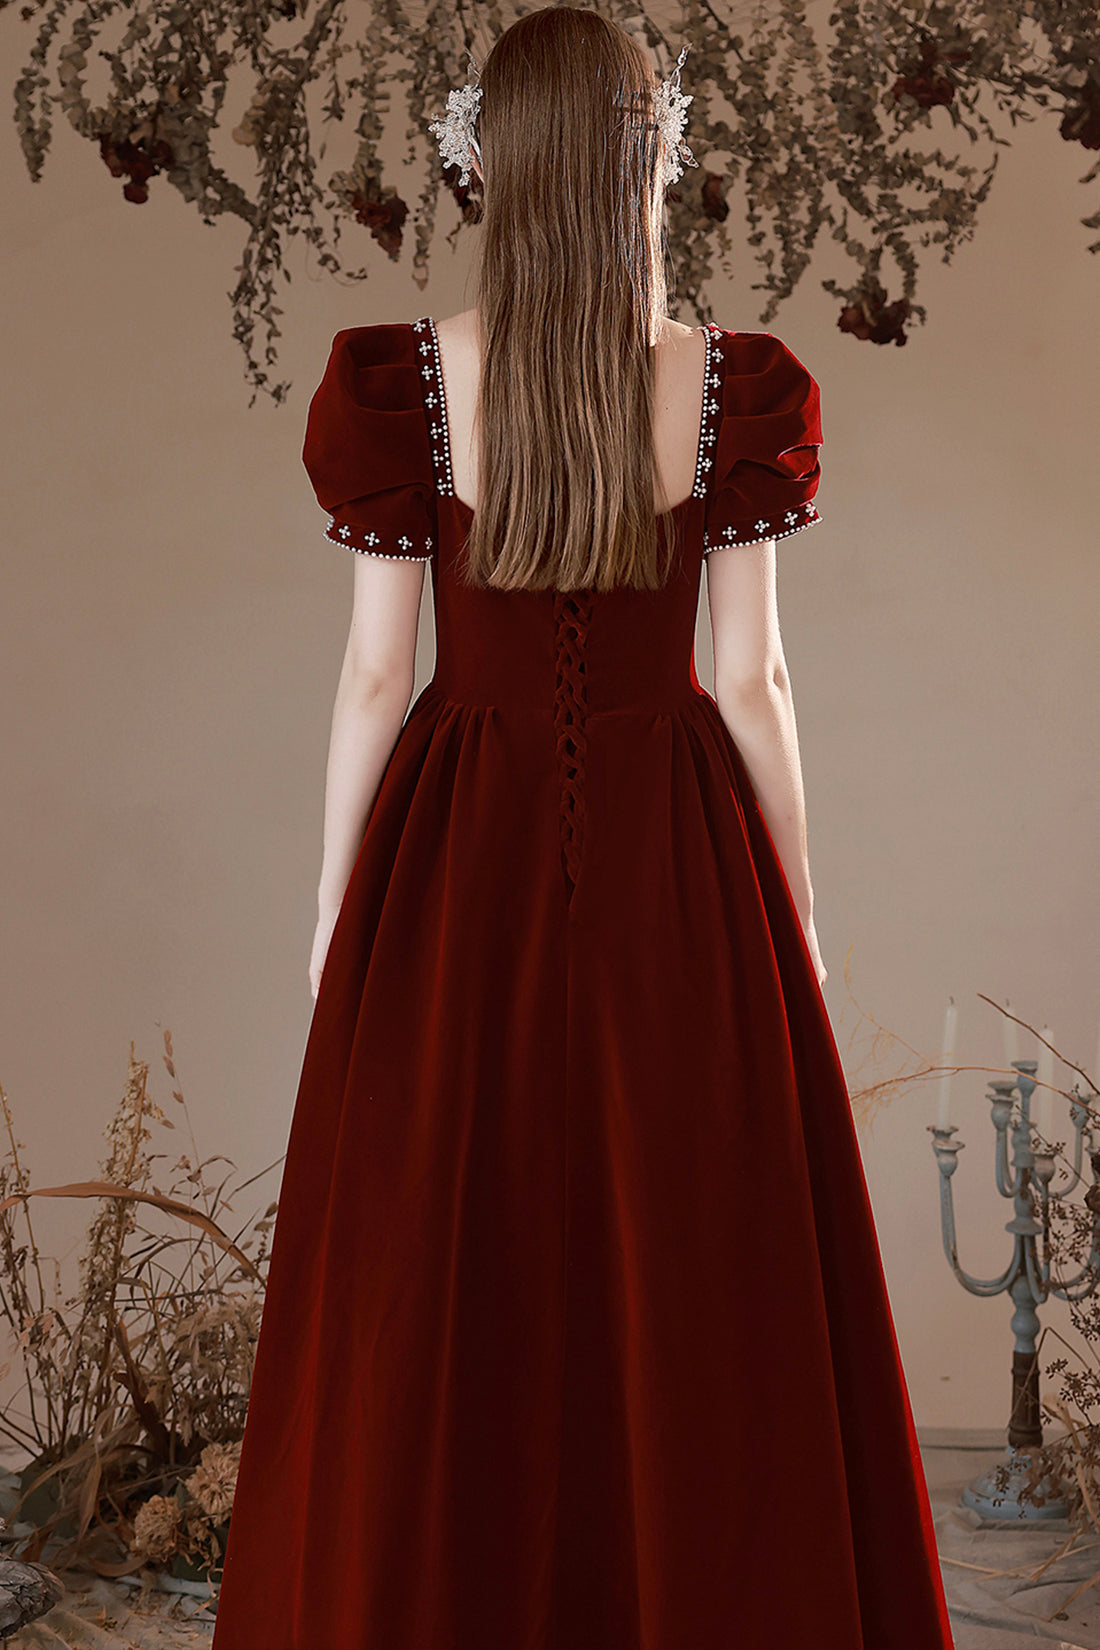 Burgundy Velvet Long Formal Dress, A-Line Short Sleeve Evening Party Dress